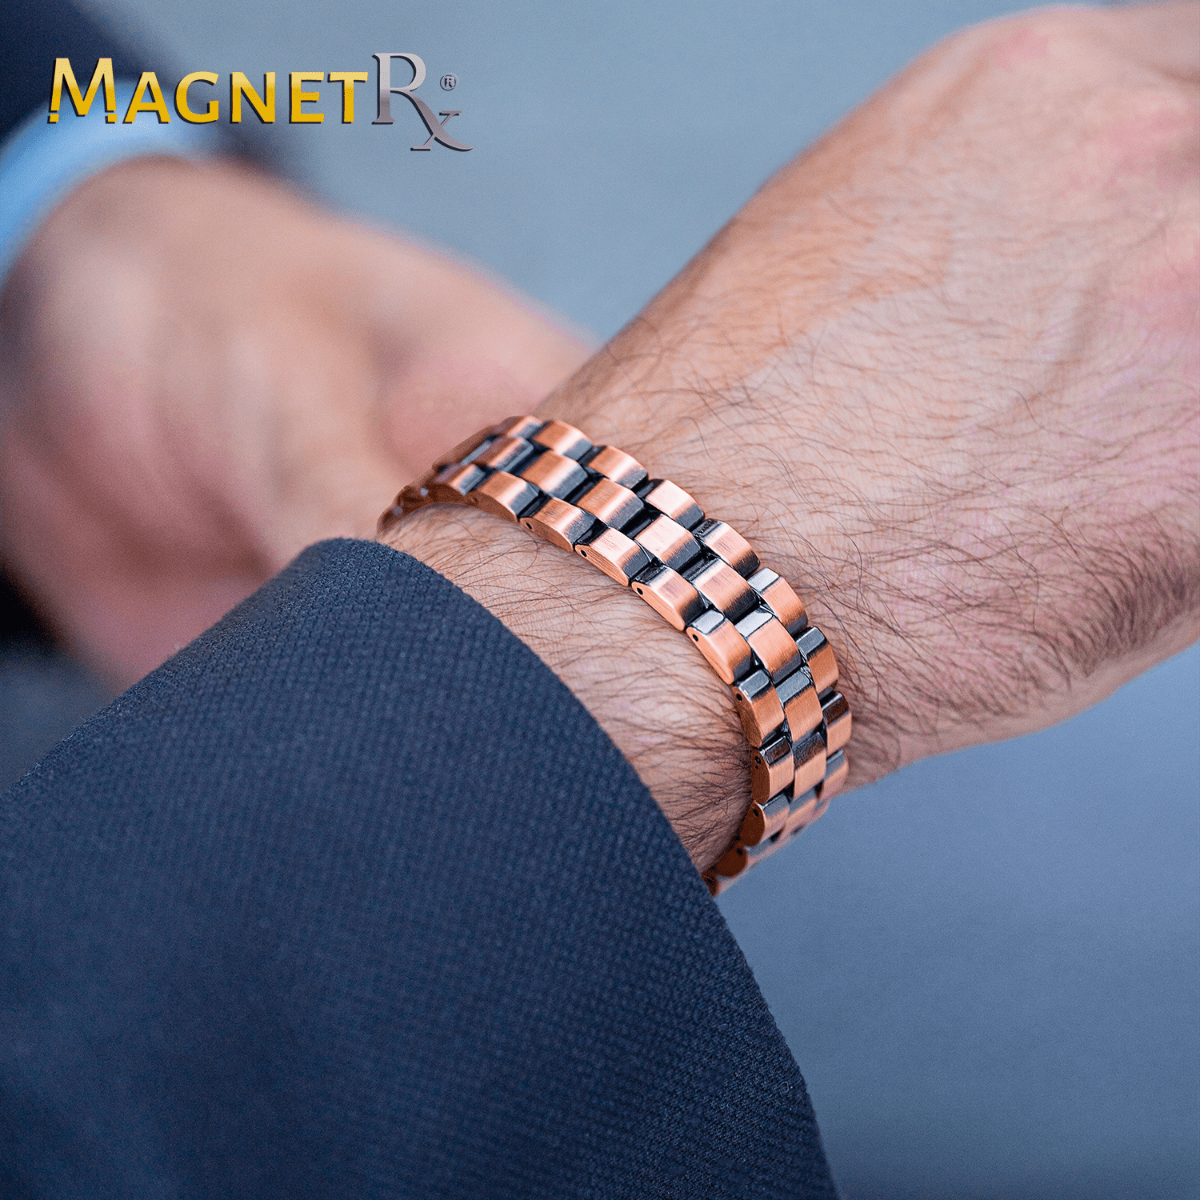 MagnetRX® Copper Magnetic Necklace - Ultra Strength Magnetic Copper  Necklace for Men and Women - 99.9% Pure Copper Necklace with Magnets